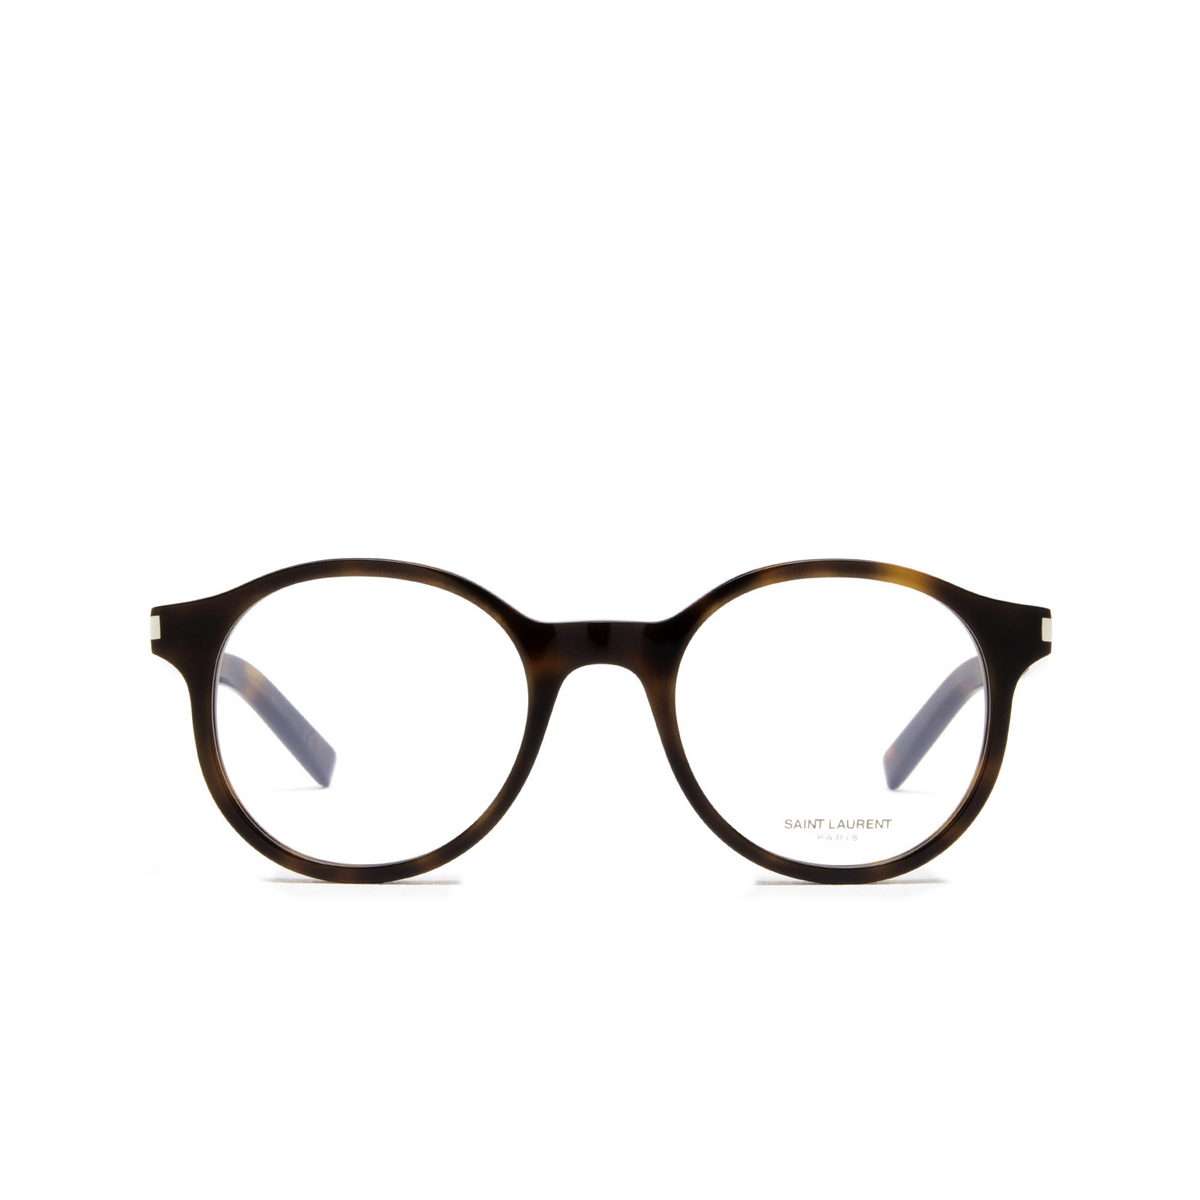 Saint Laurent® Round Eyeglasses: SL 521 OPT color 002 Havana - front view